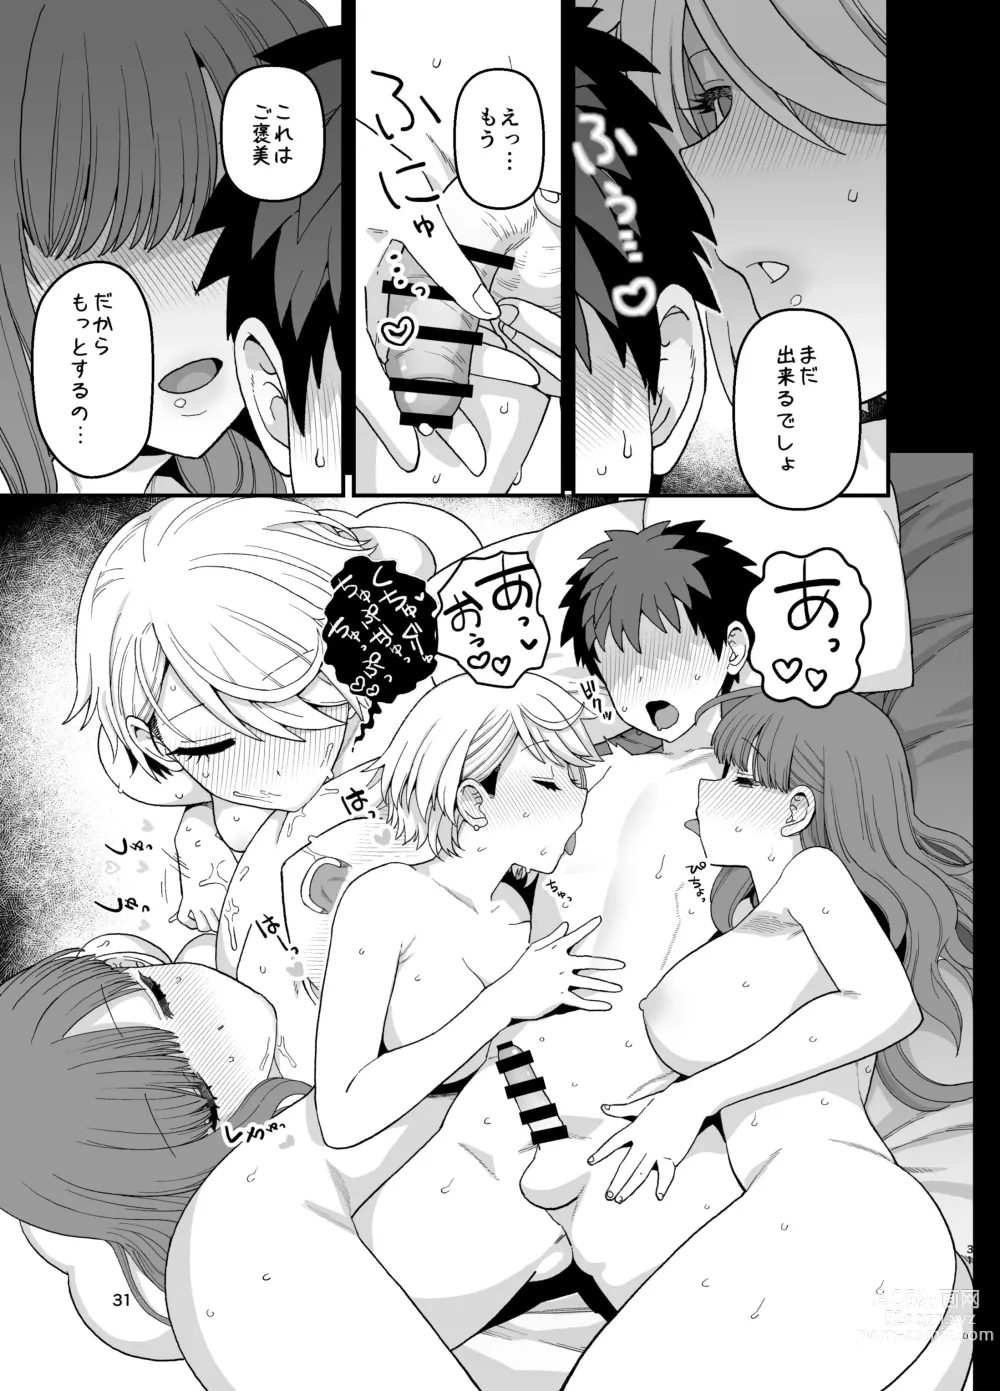 Page 32 of doujinshi Sentaku Kyouka Nijigenme